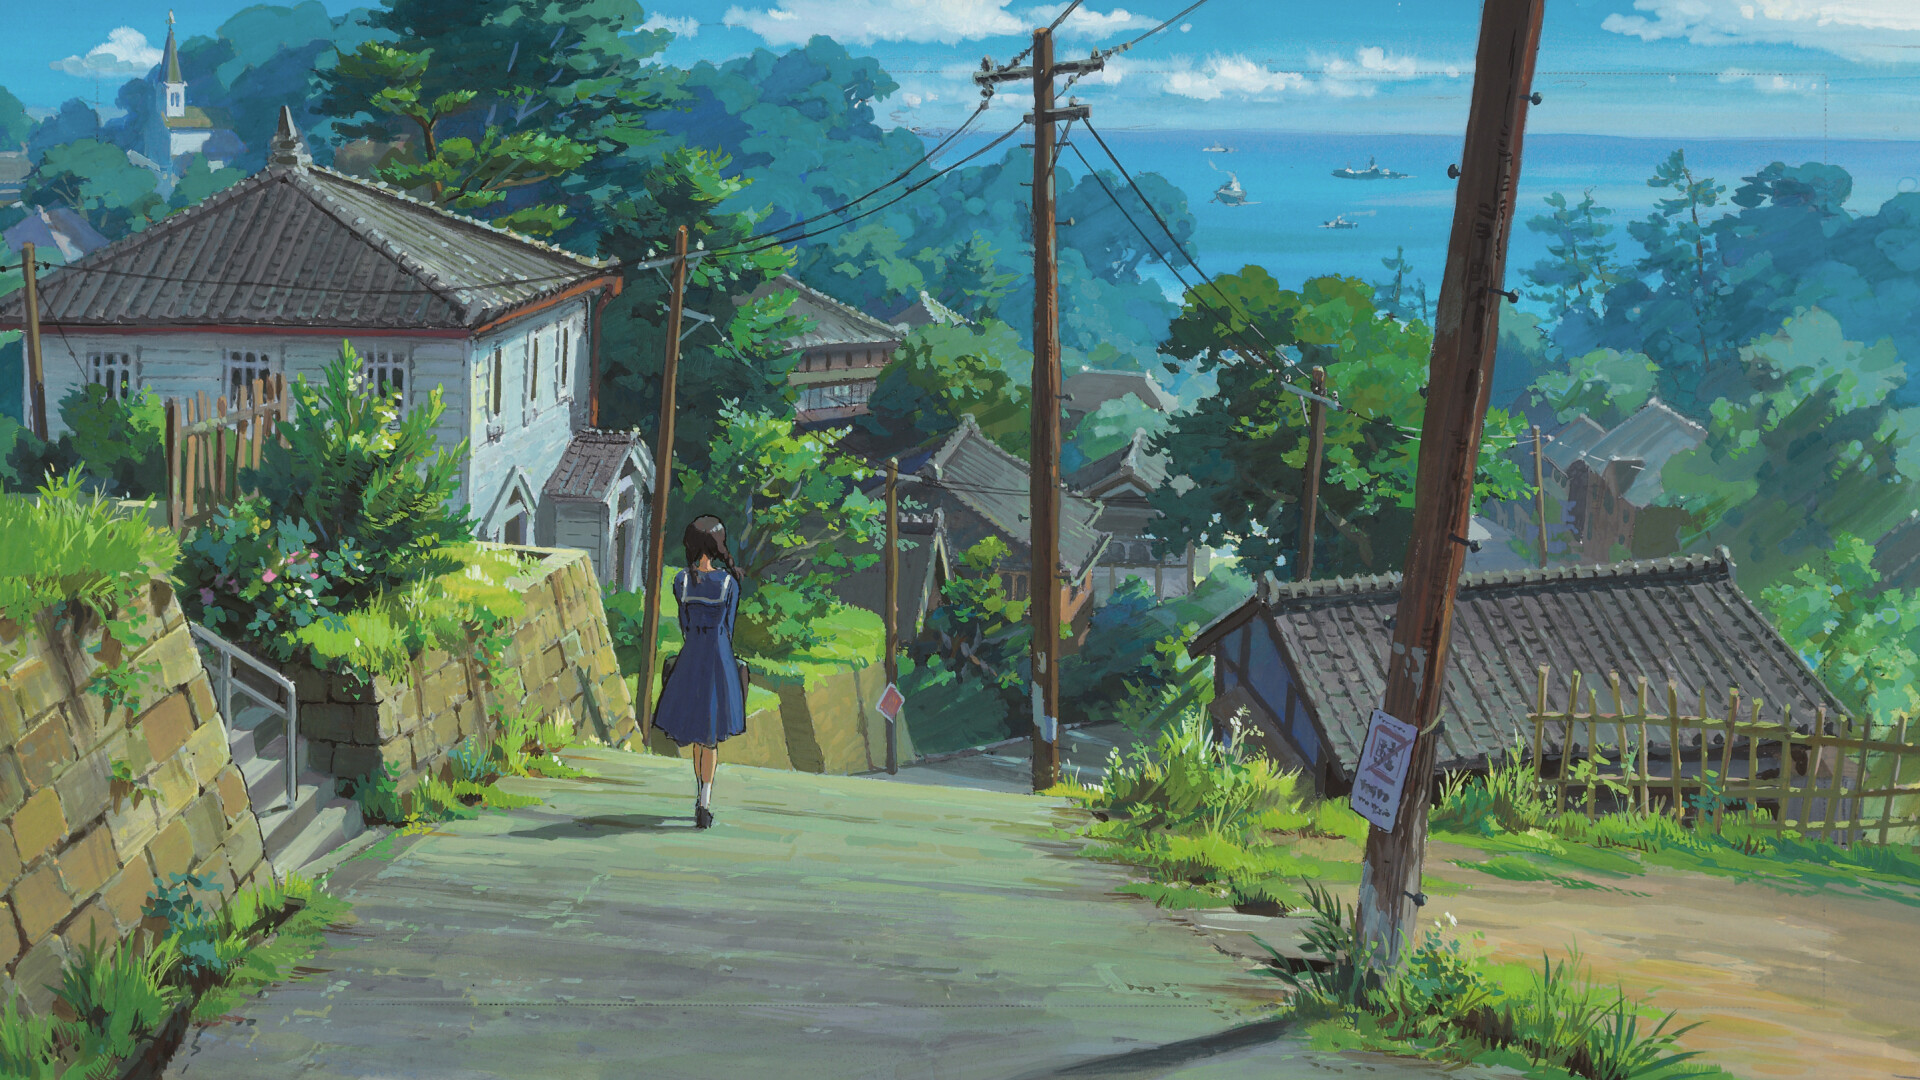 Studio Ghibli: From Up on Poppy Hill, Directed by Goro Miyazaki. 1920x1080 Full HD Wallpaper.